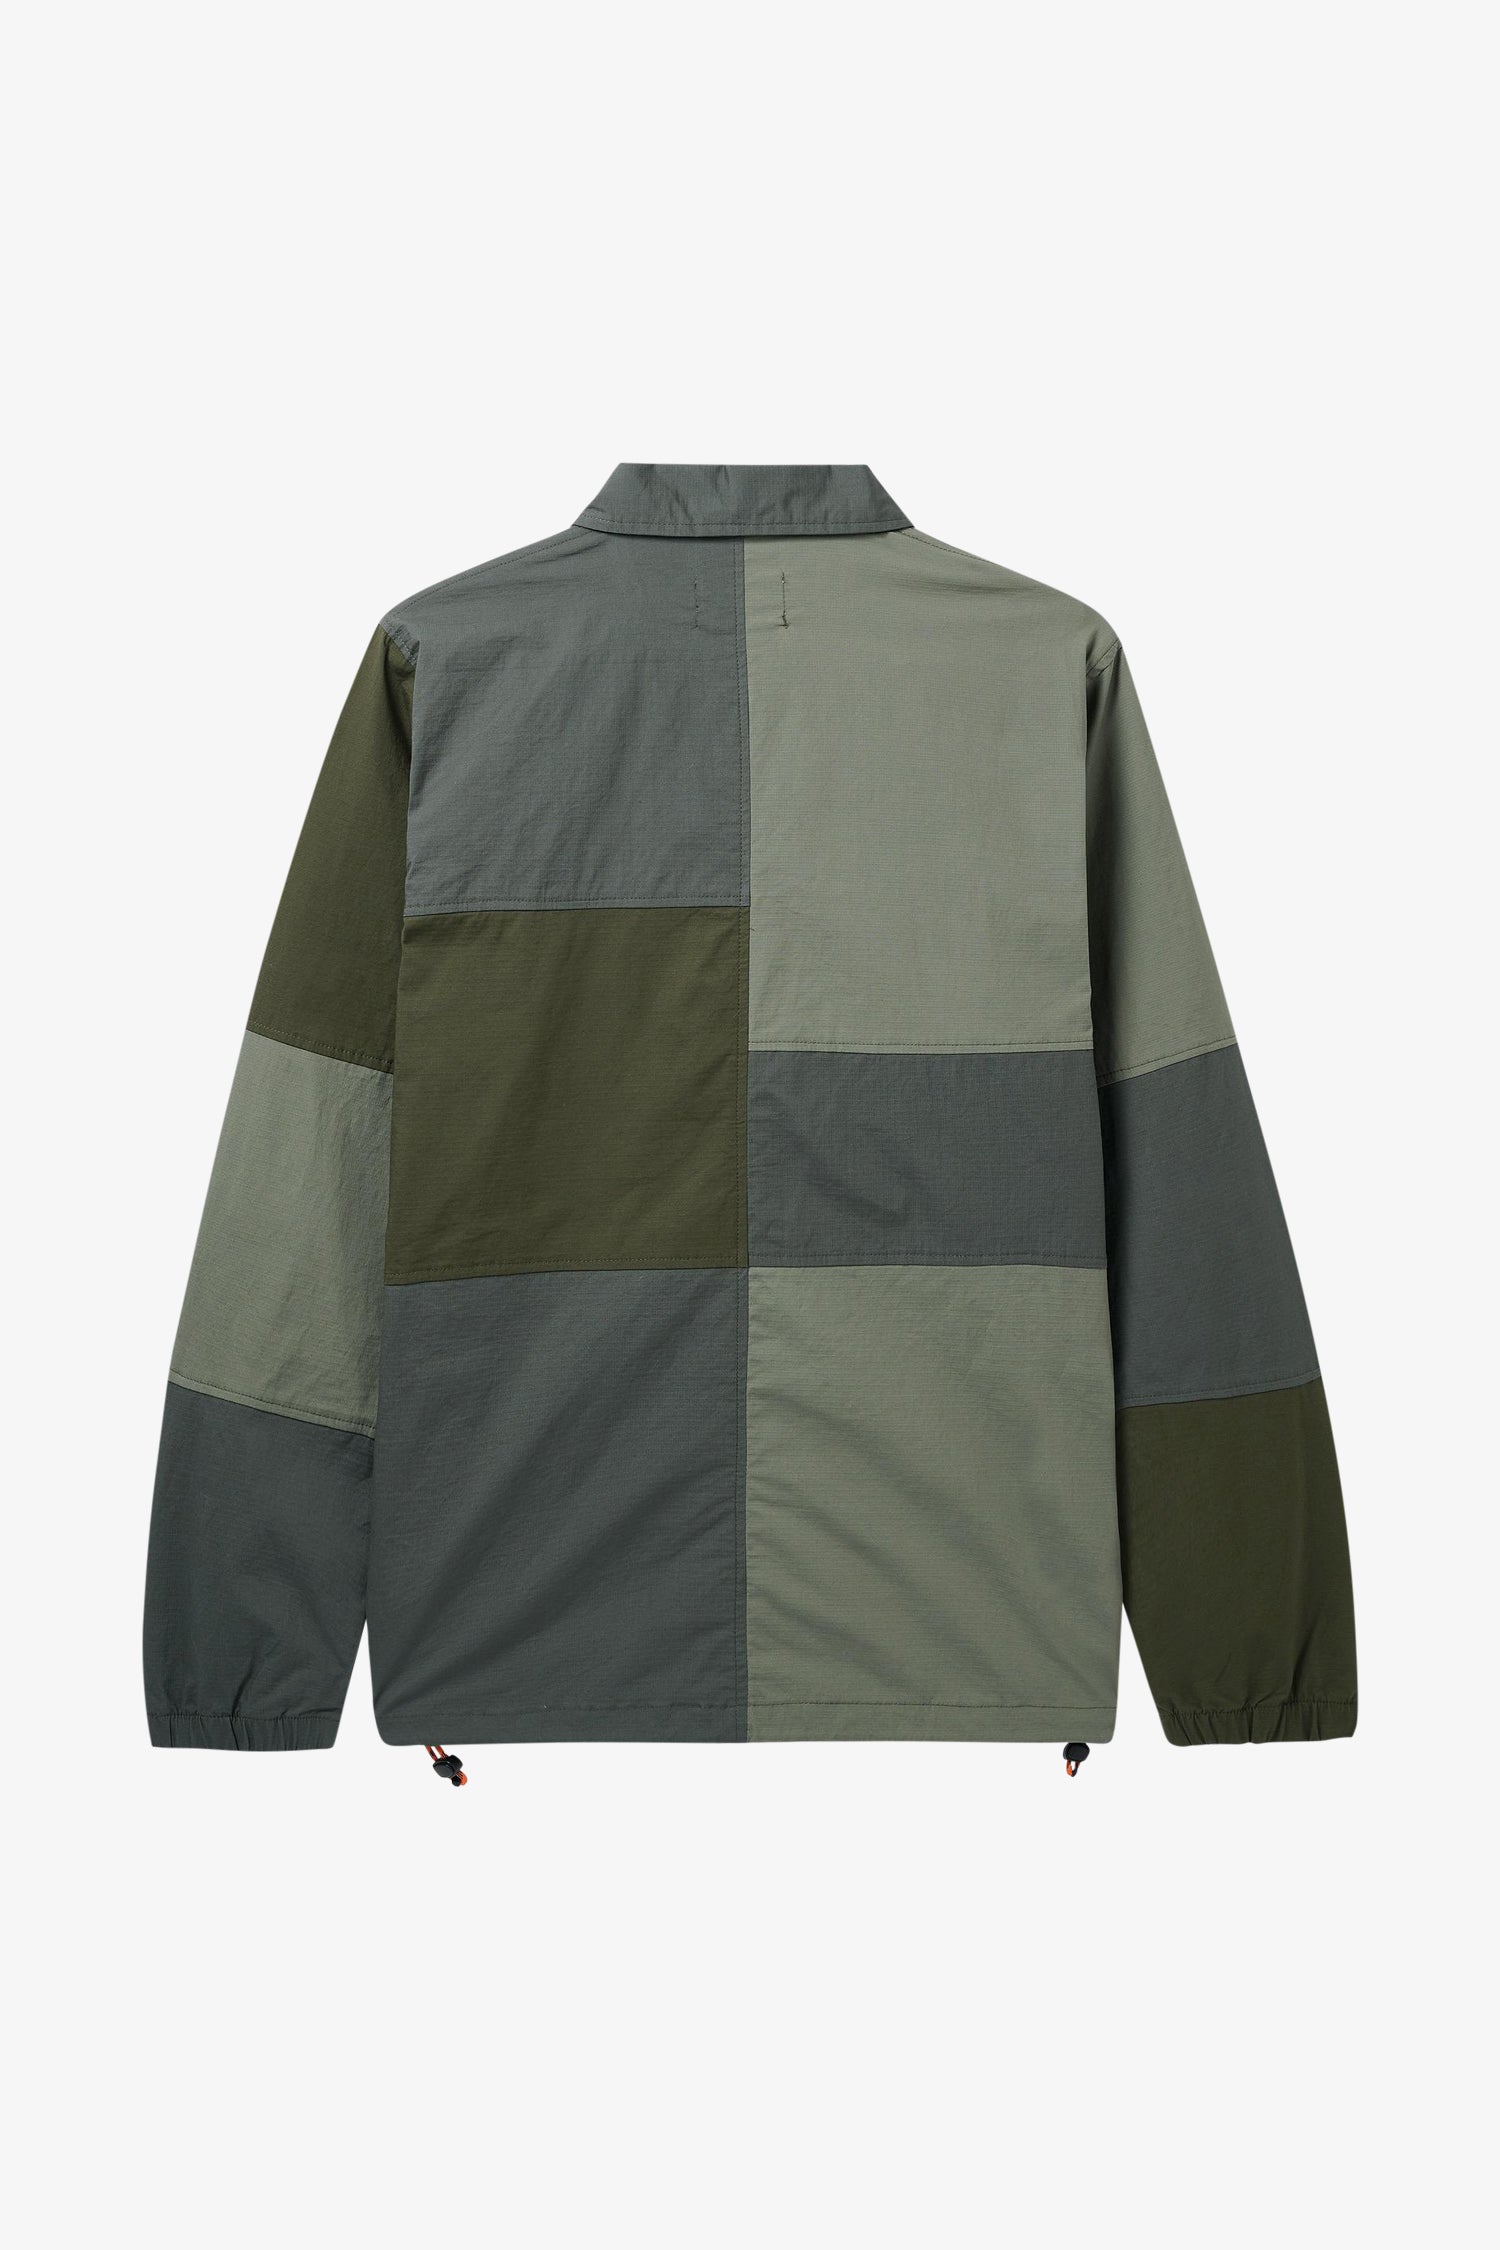 Selectshop FRAME - BUTTER GOODS Patchwork Jacket Outerwear Dubai